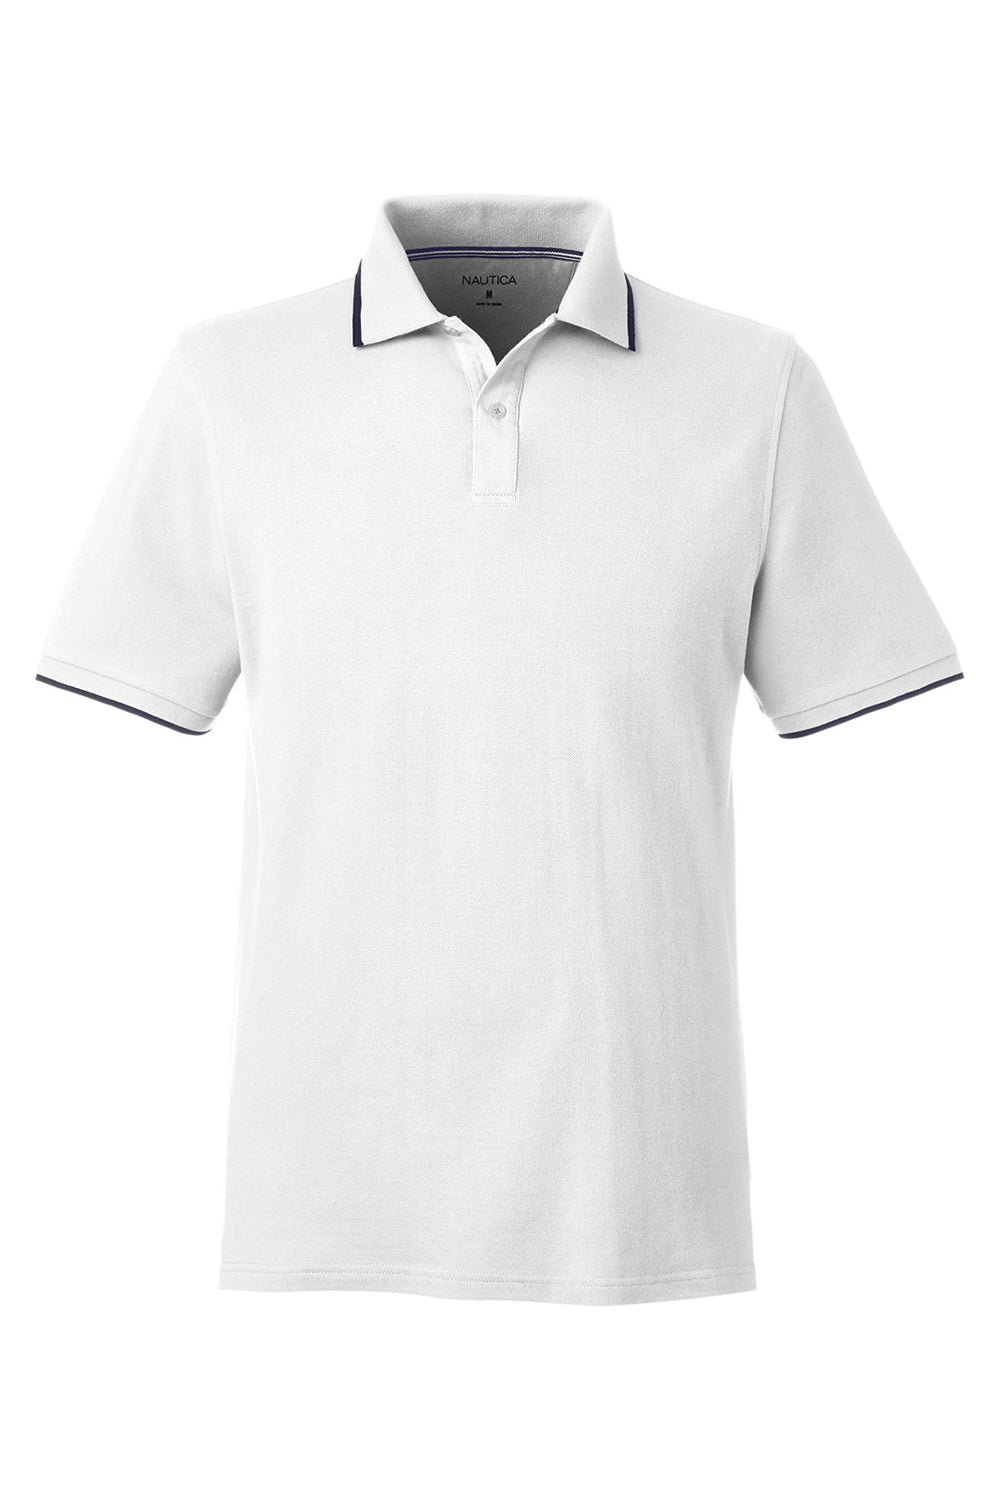 Nautica N17165 Mens Desk Short Sleeve Polo Shirt White/Navy Blue Flat Front